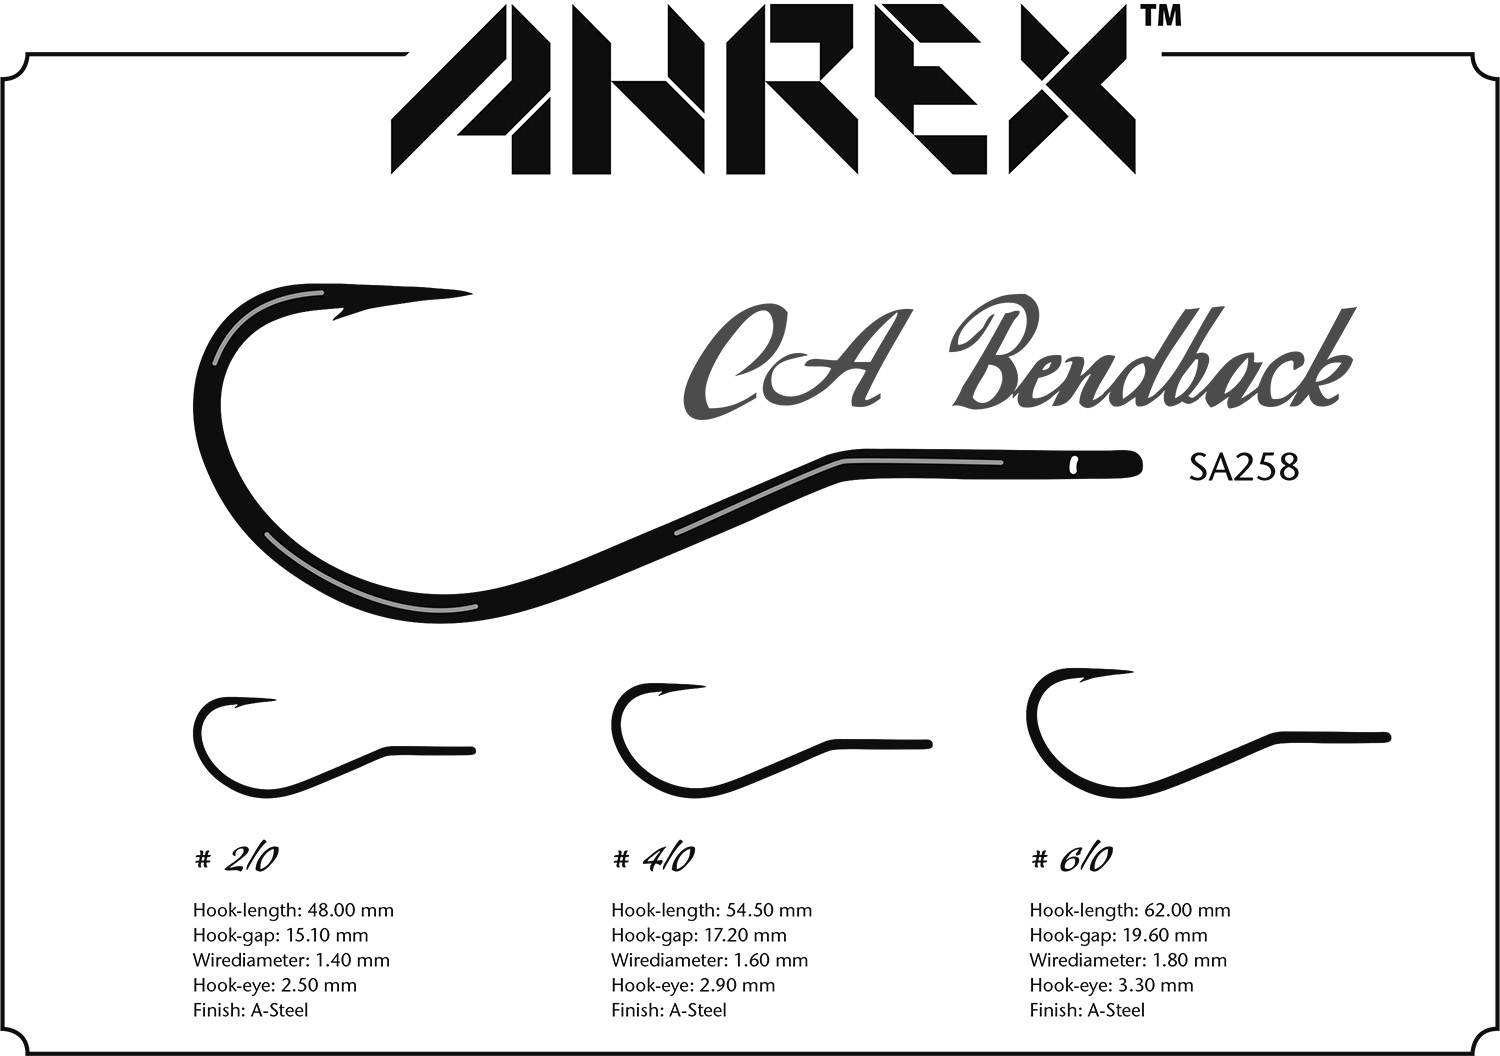 Ahrex PR378 GB Predator Swimbait Hooks